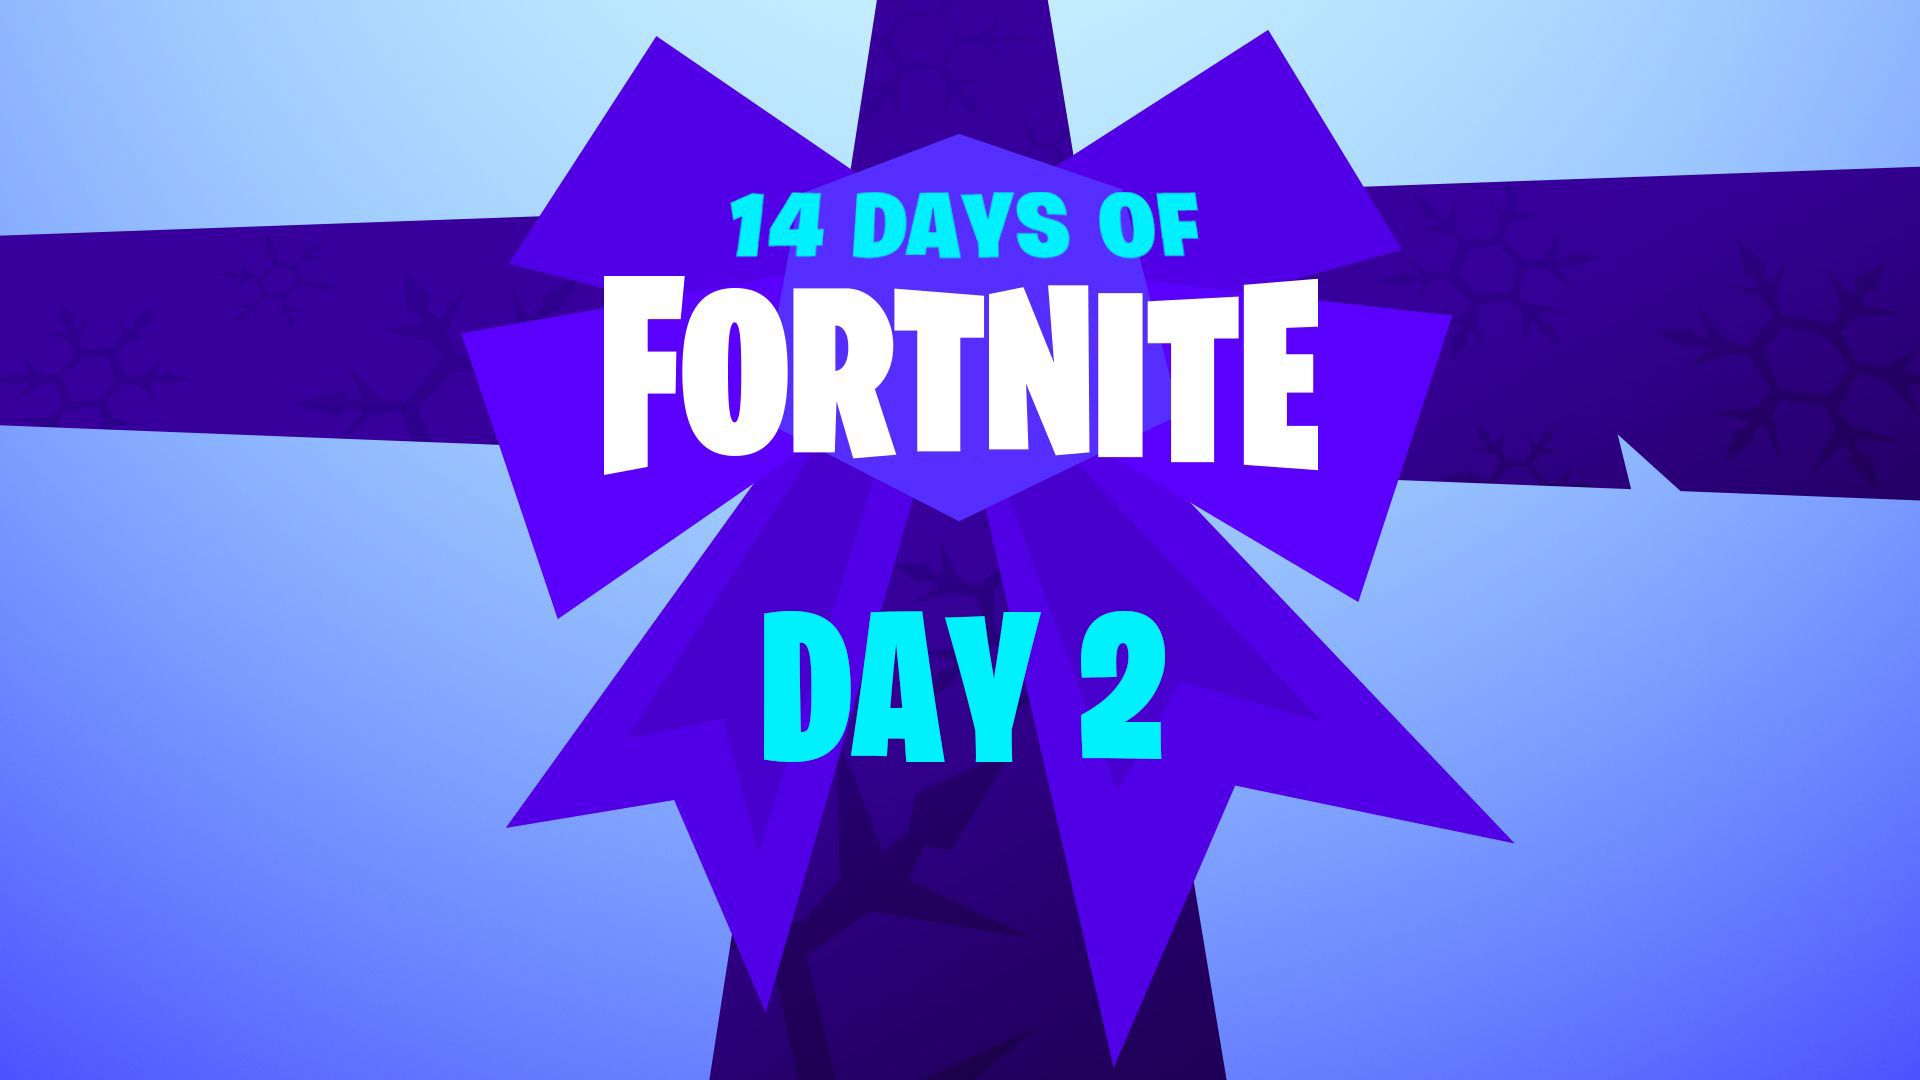 14 Days of Fortnite - Day 2 challenge & reward